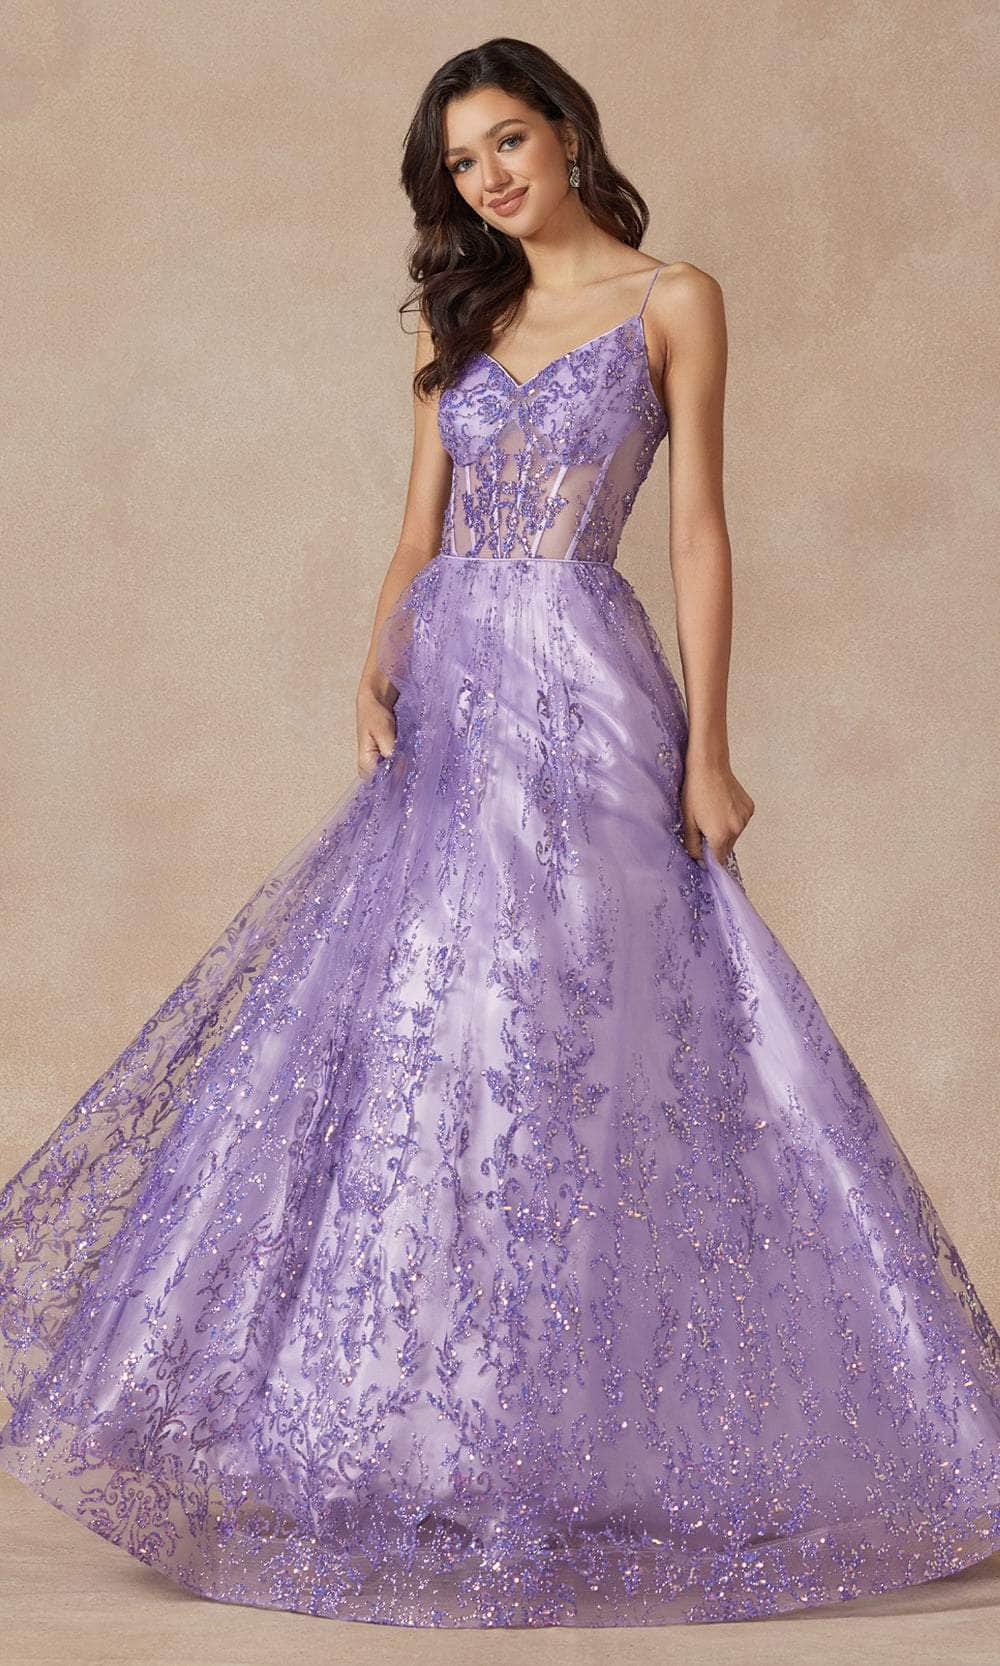 Image of Juliet Dresses 2414 - Sleeveless Glitter Embellished Ballgown